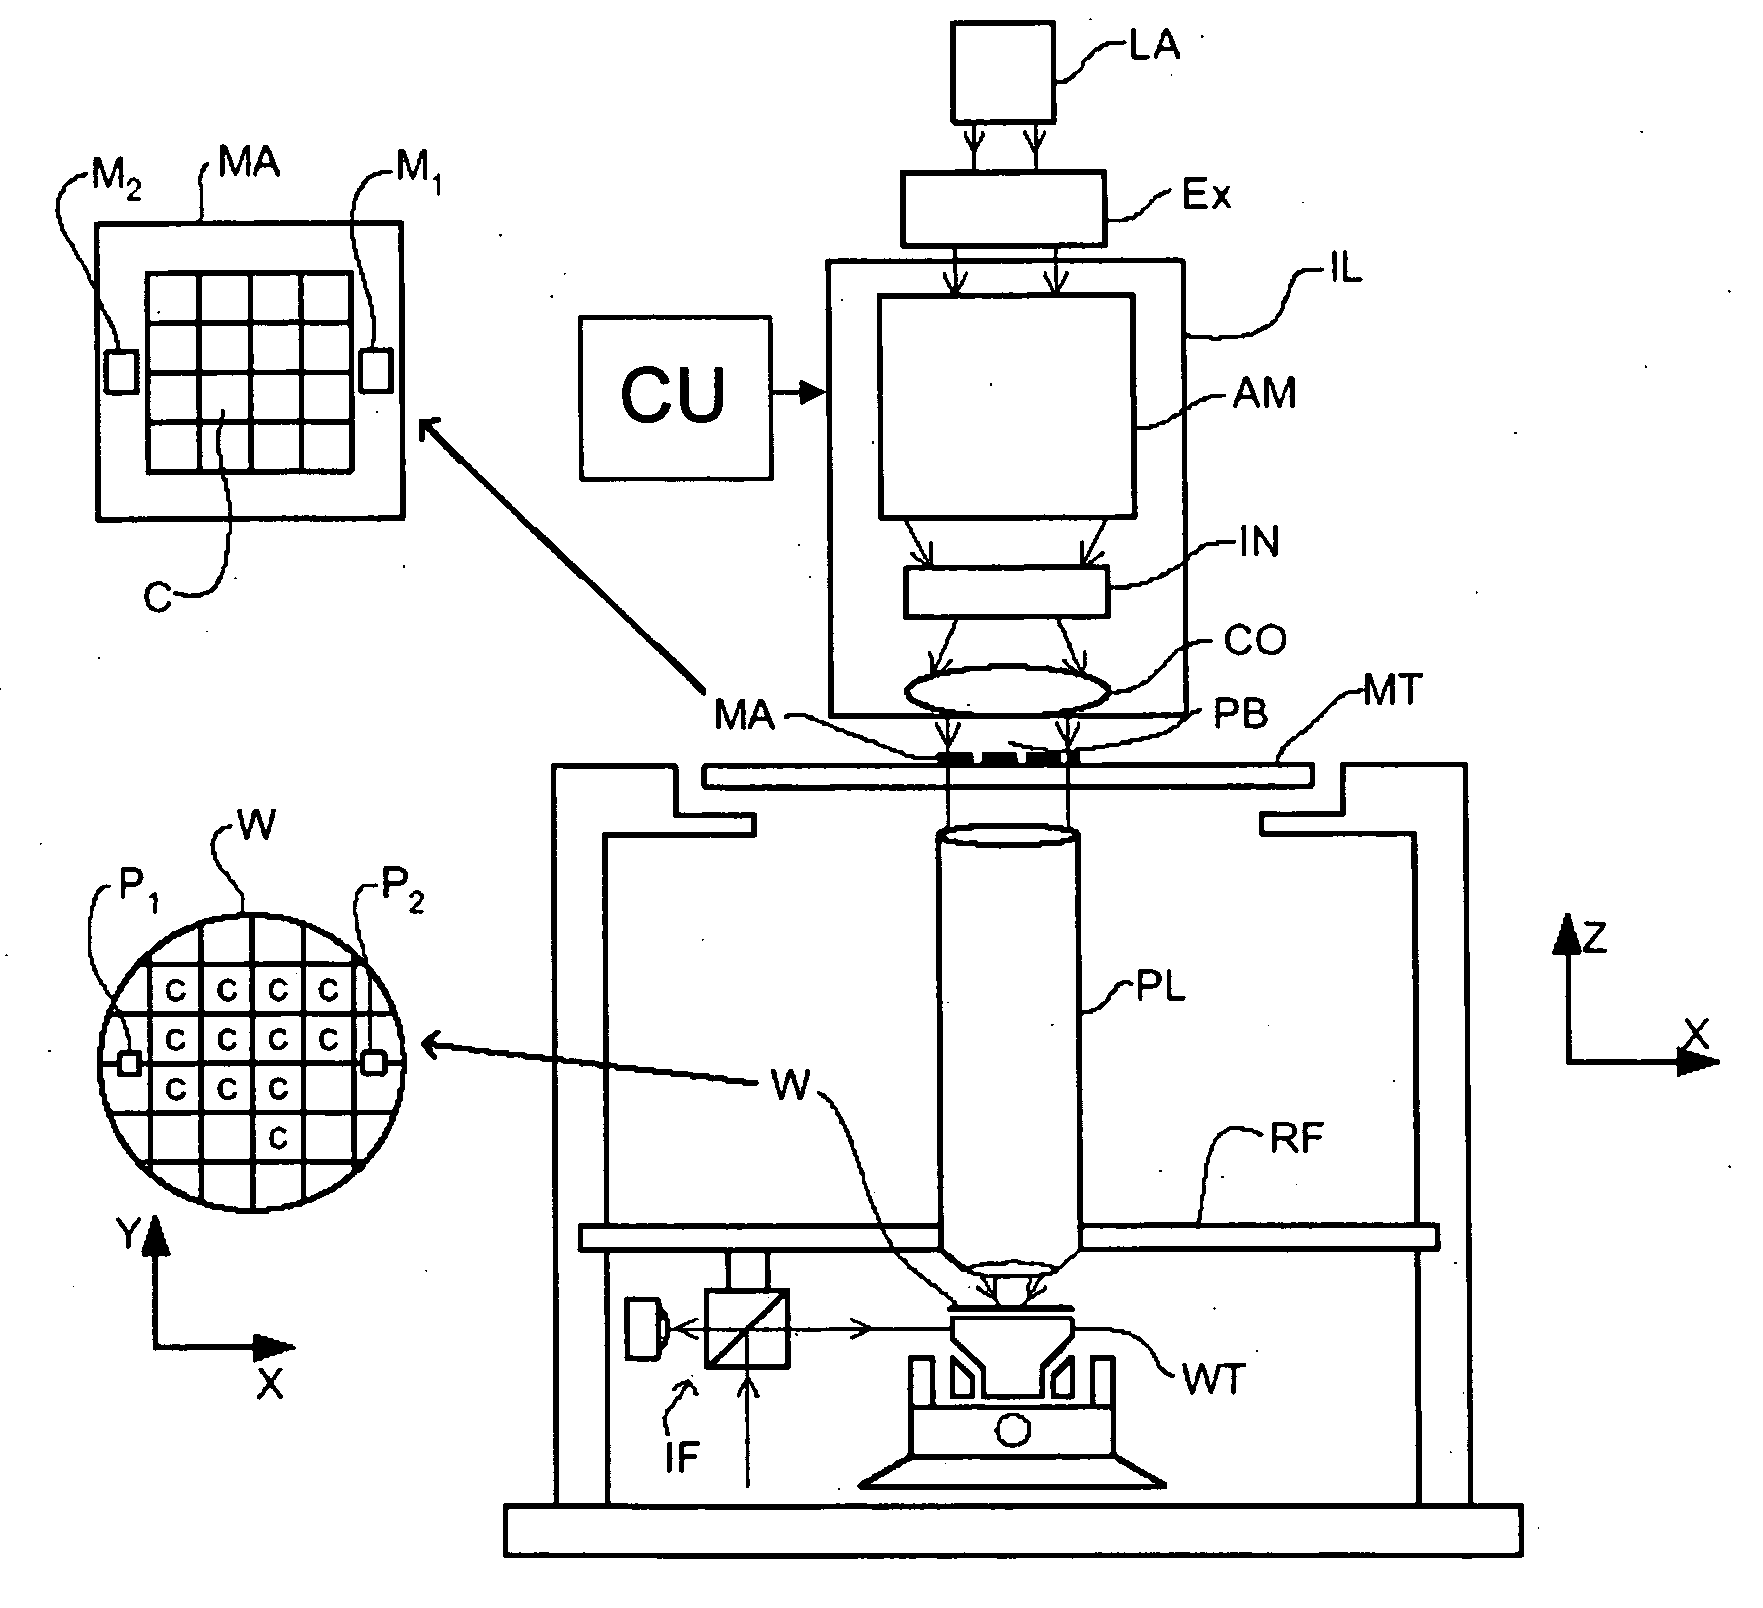 Lithographic apparatus and method for optimizing illumination using a photolithographic simulation